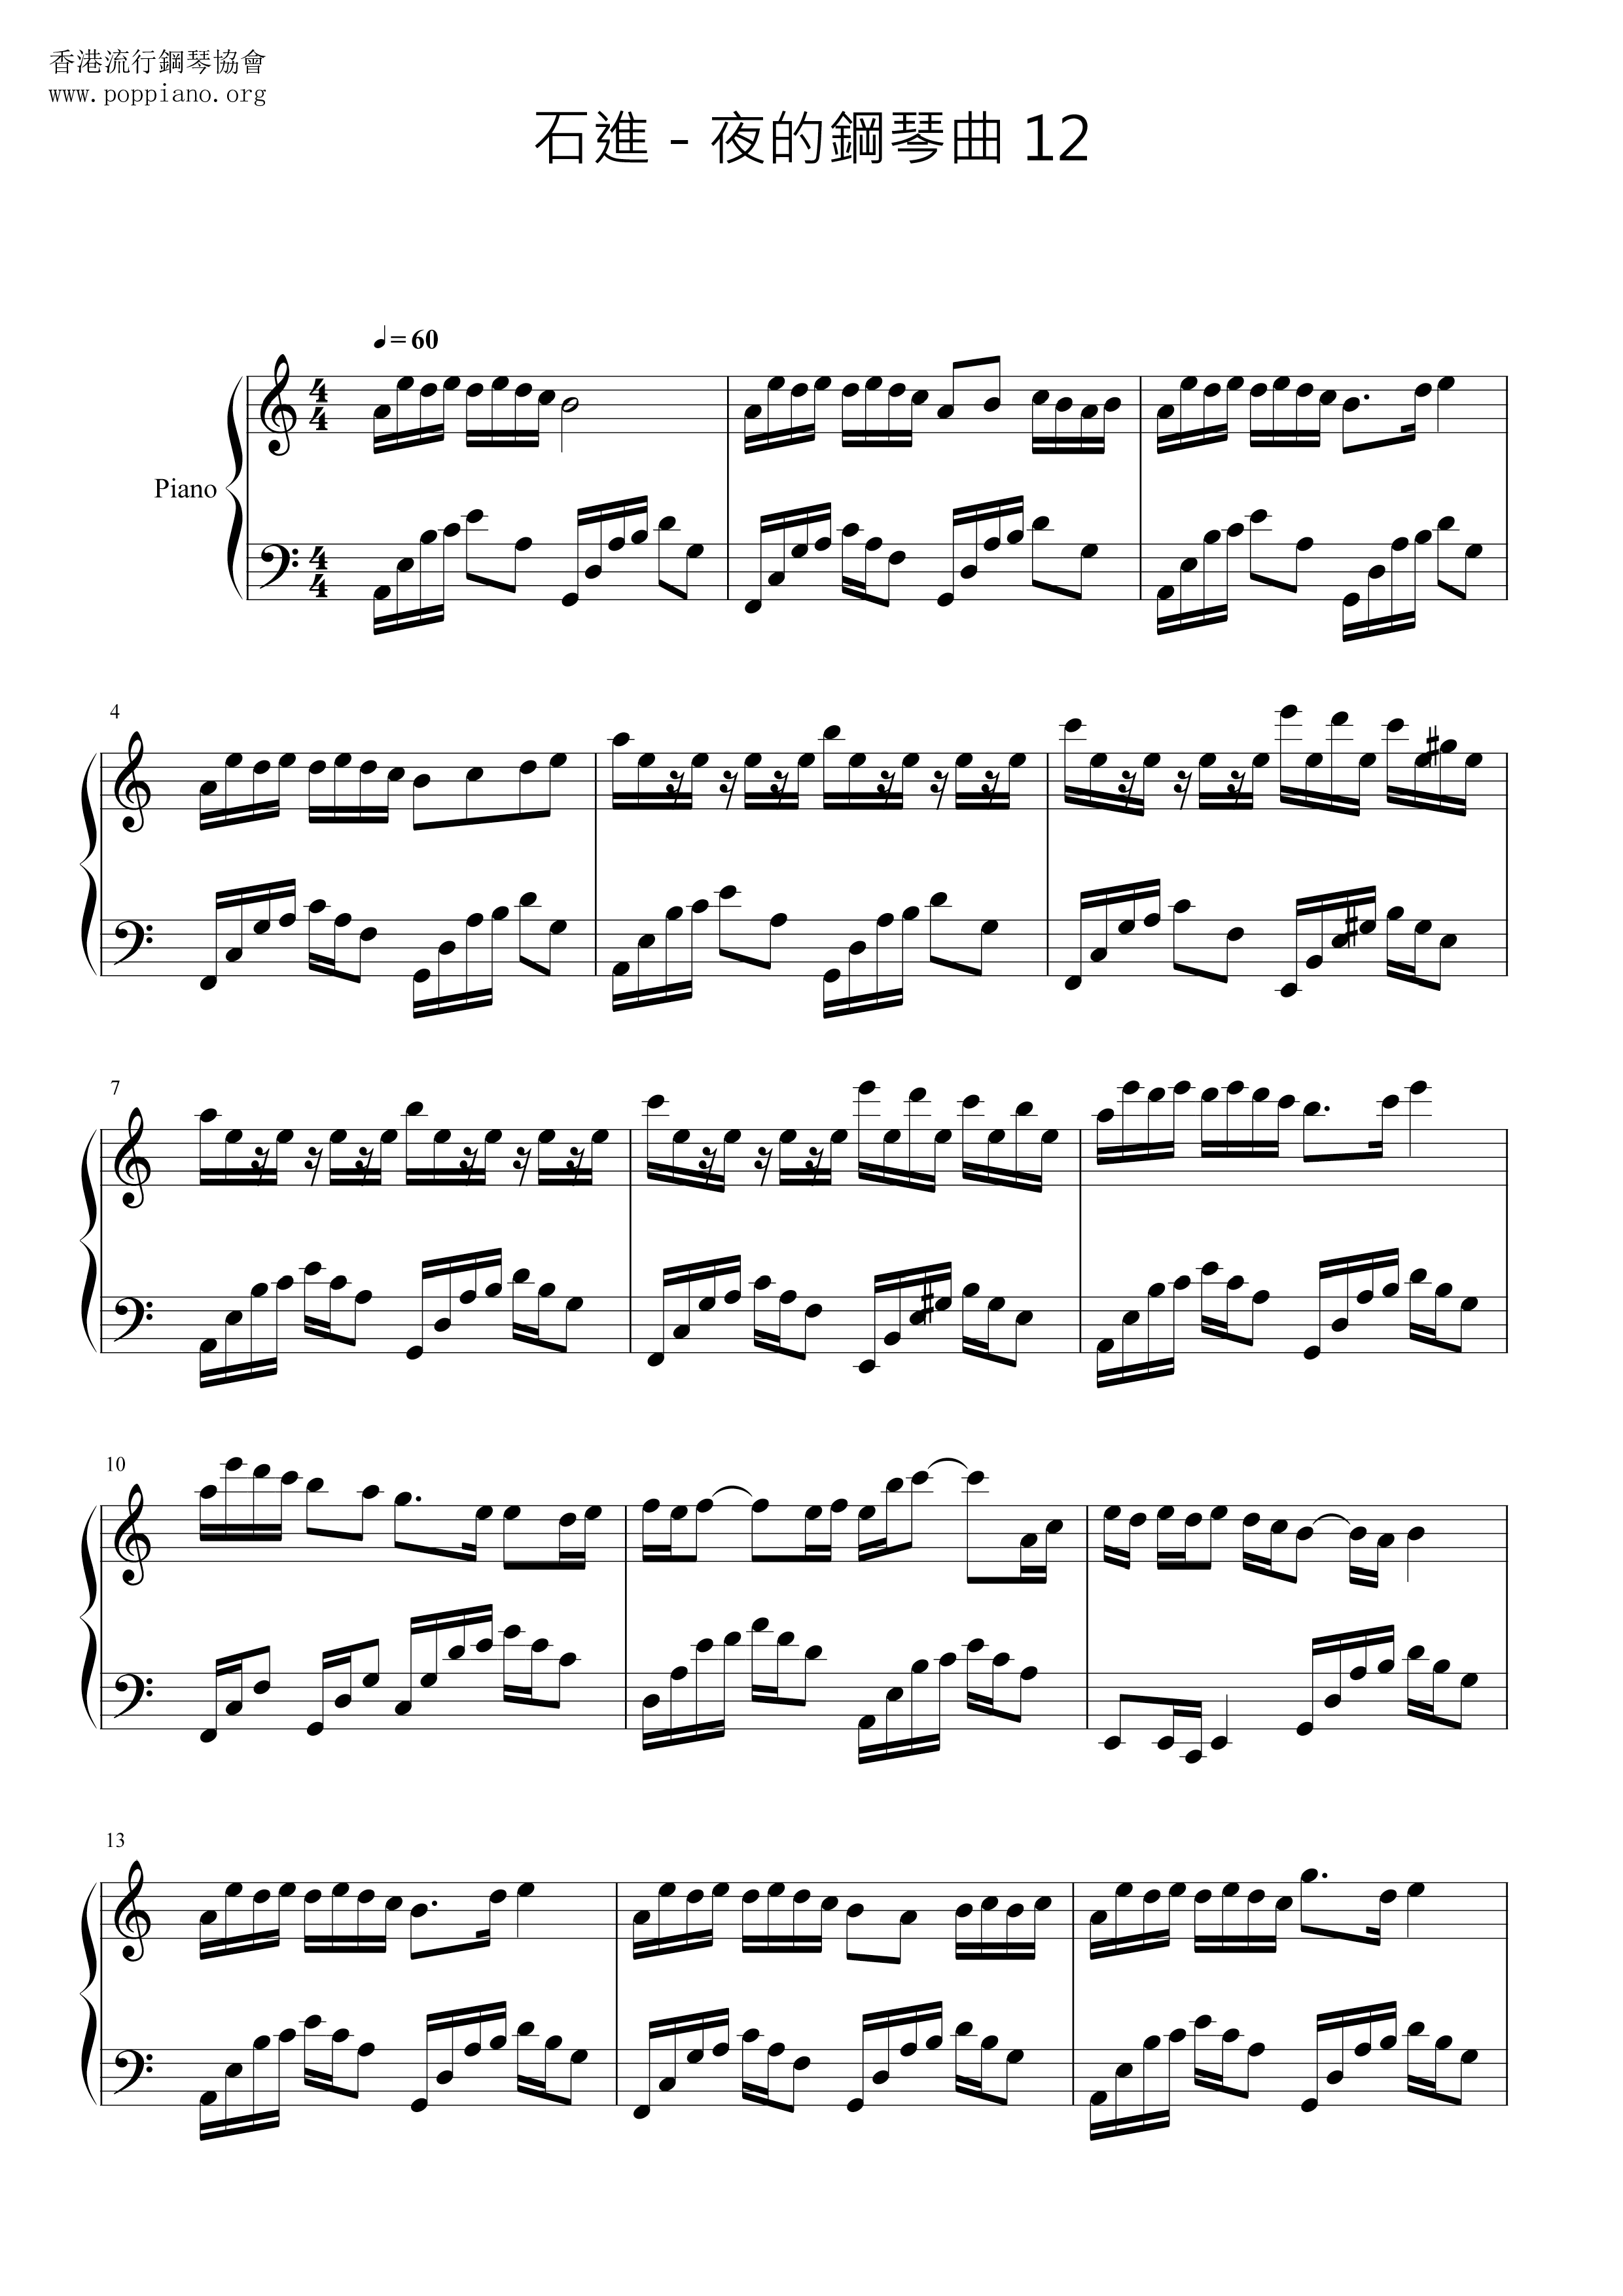 Melody Of The Night 12 Score